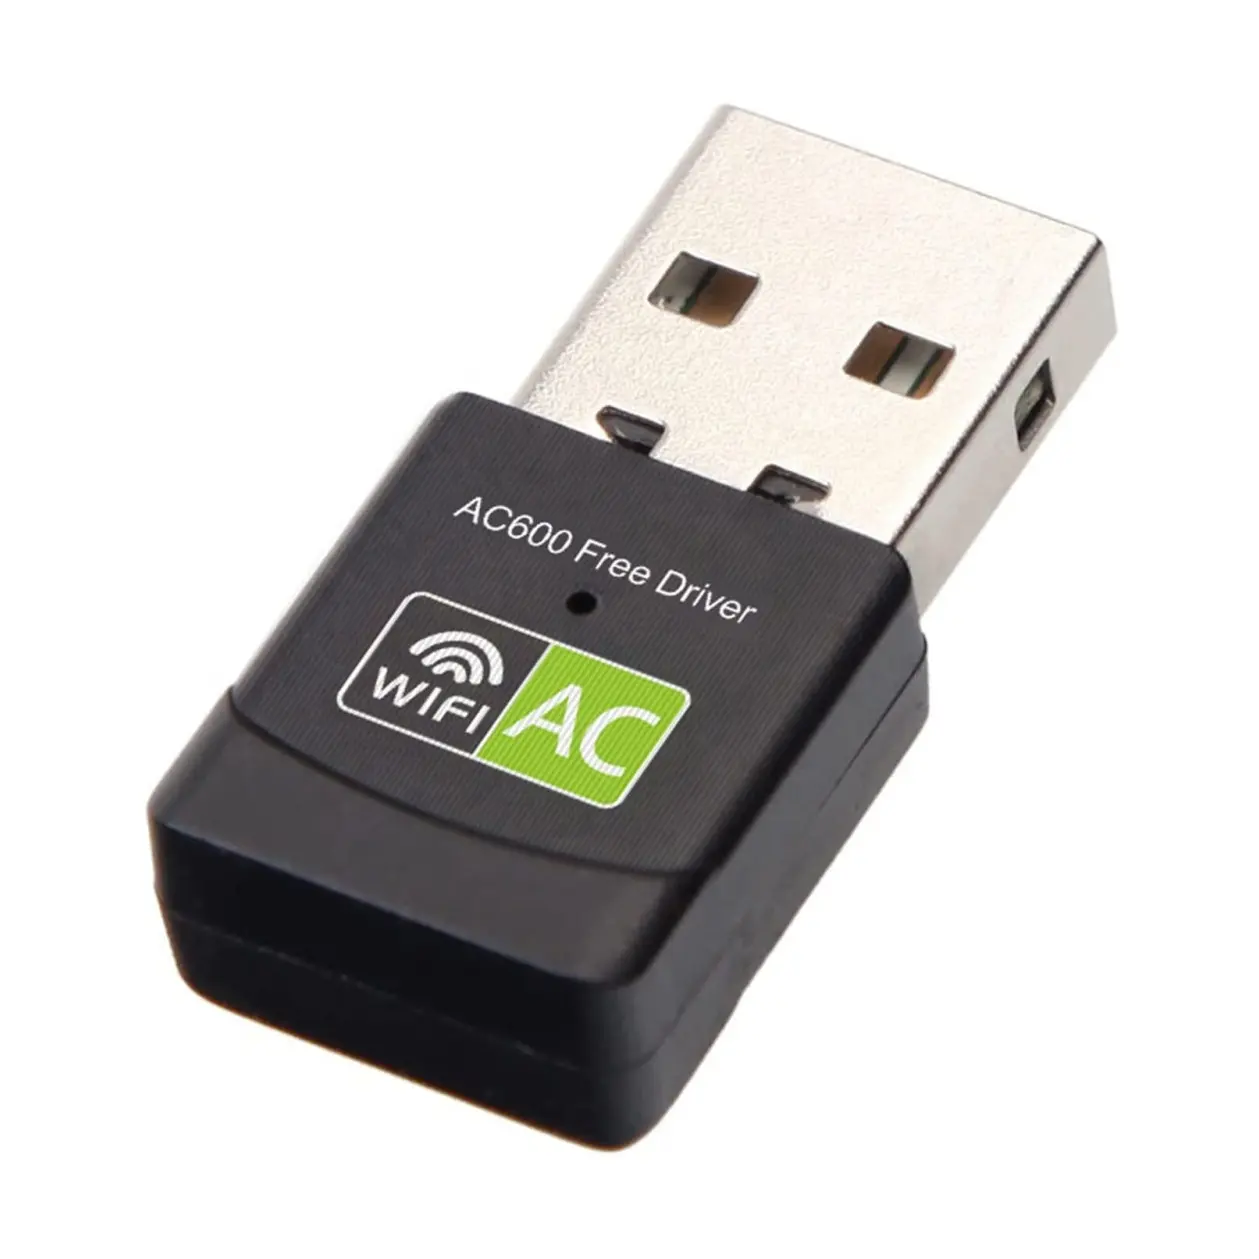 Kostenloser Treiber USB WiFi Adapter für PC, AC600M USB WiFi Dongle 802.11ac Wireless Netzwerk Adapter mit Dual Band 2,4 GHz/5GHz